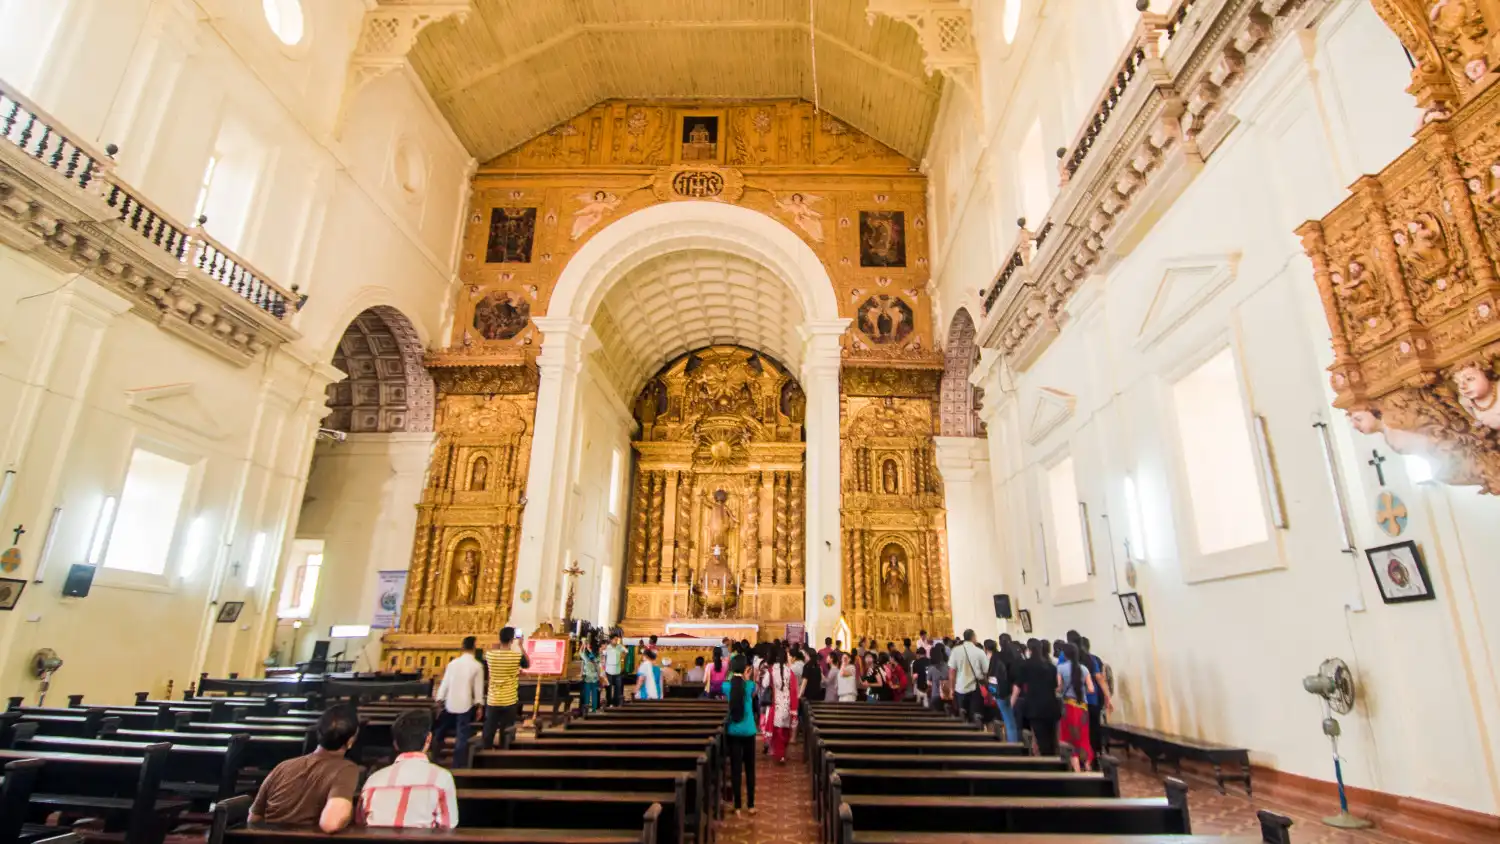 Old Goa Churches - Basilica of Bom Jesus